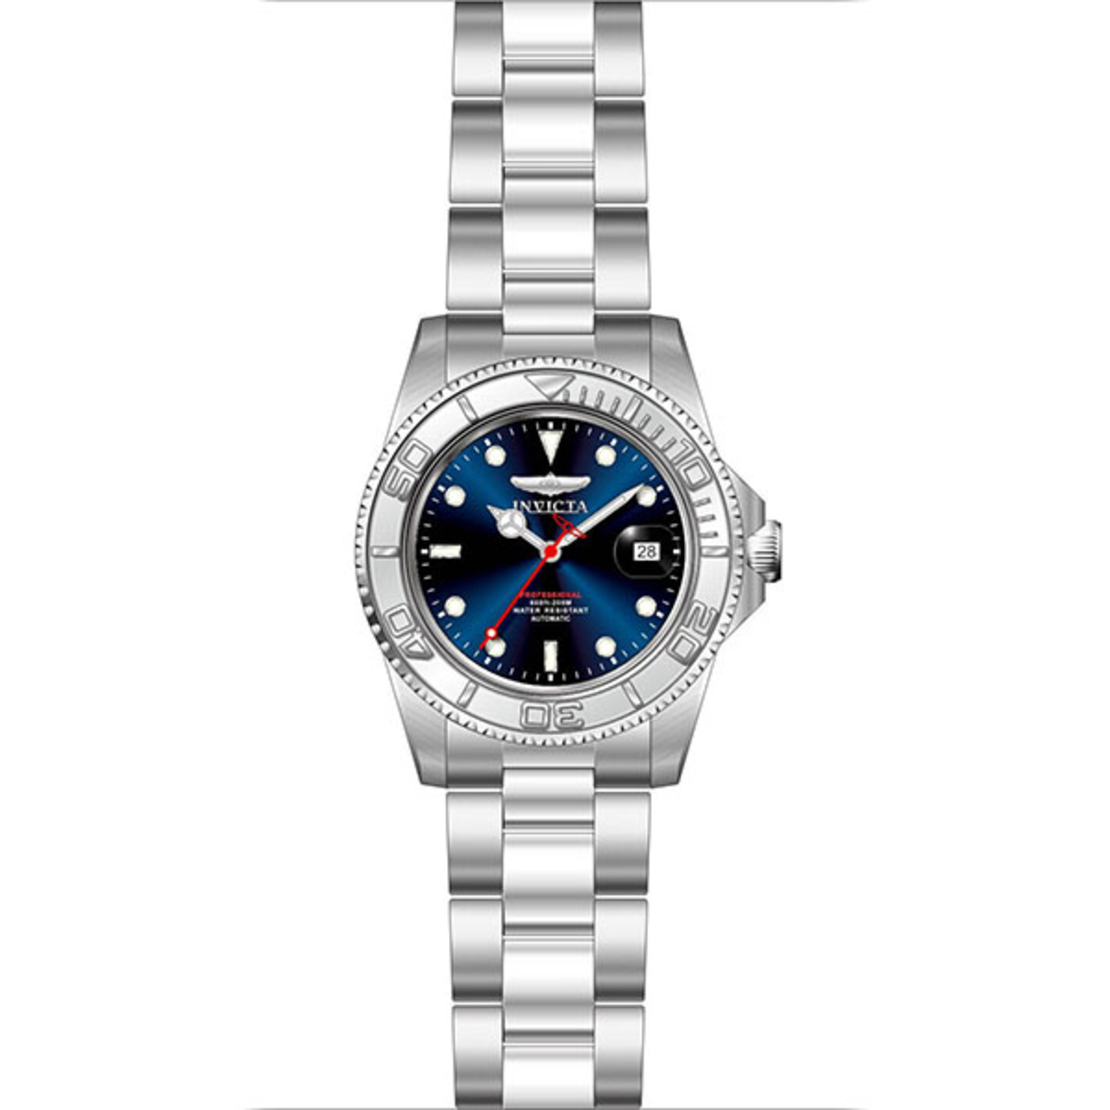 שעון Invicta Pro Diver לגבר דגם 36746